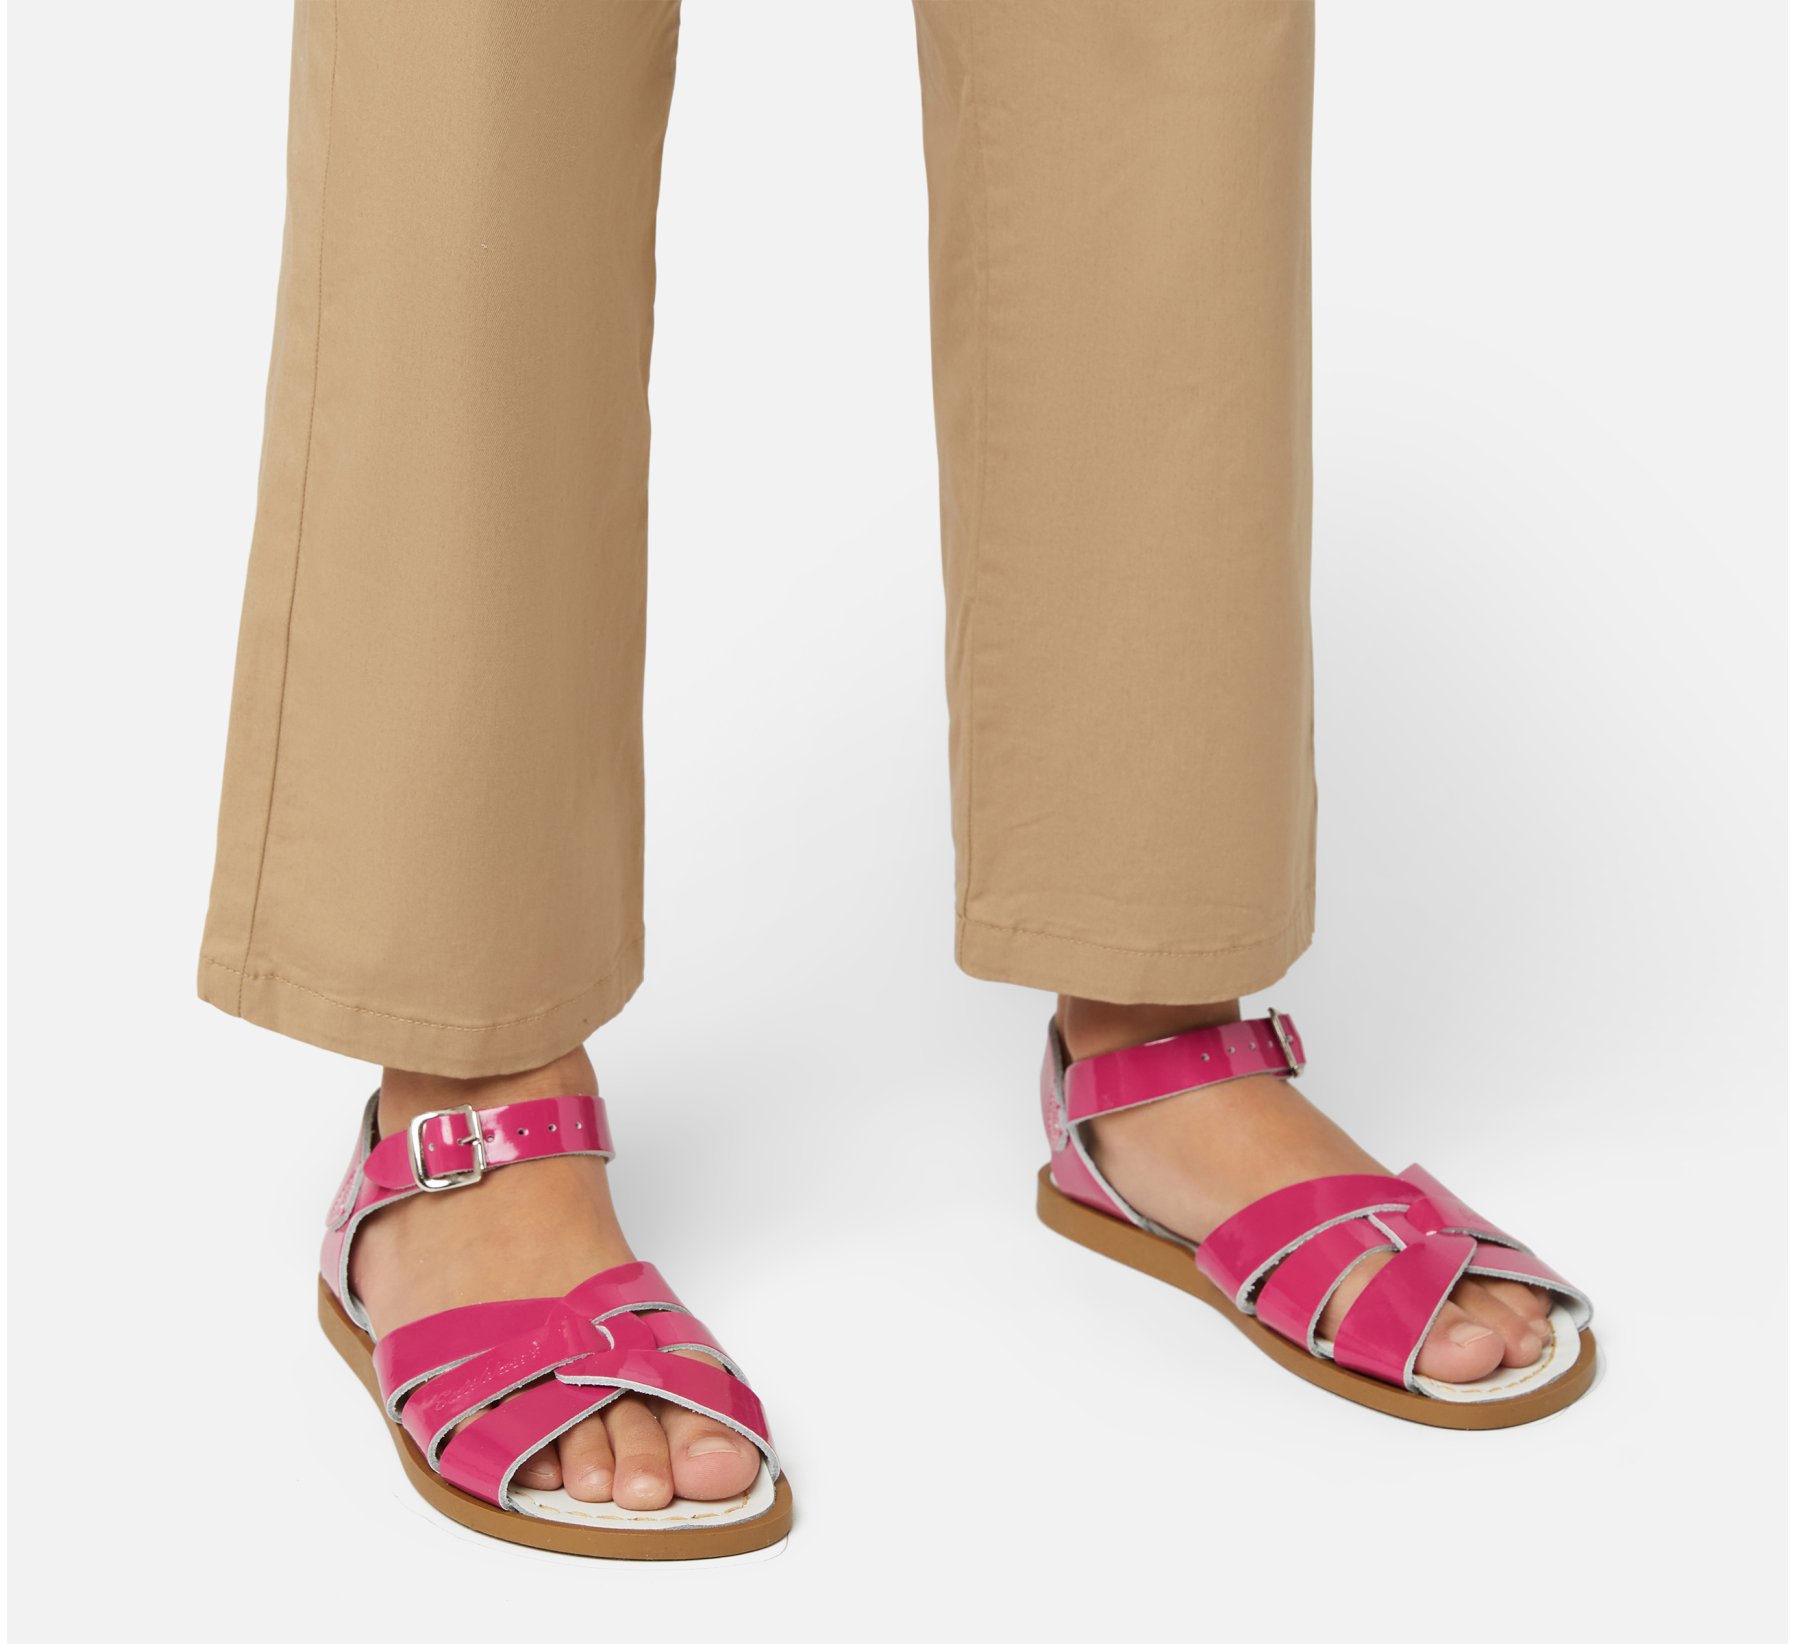 Original Shiny Fuchsia Kids Sandals - Salt Water Sandals